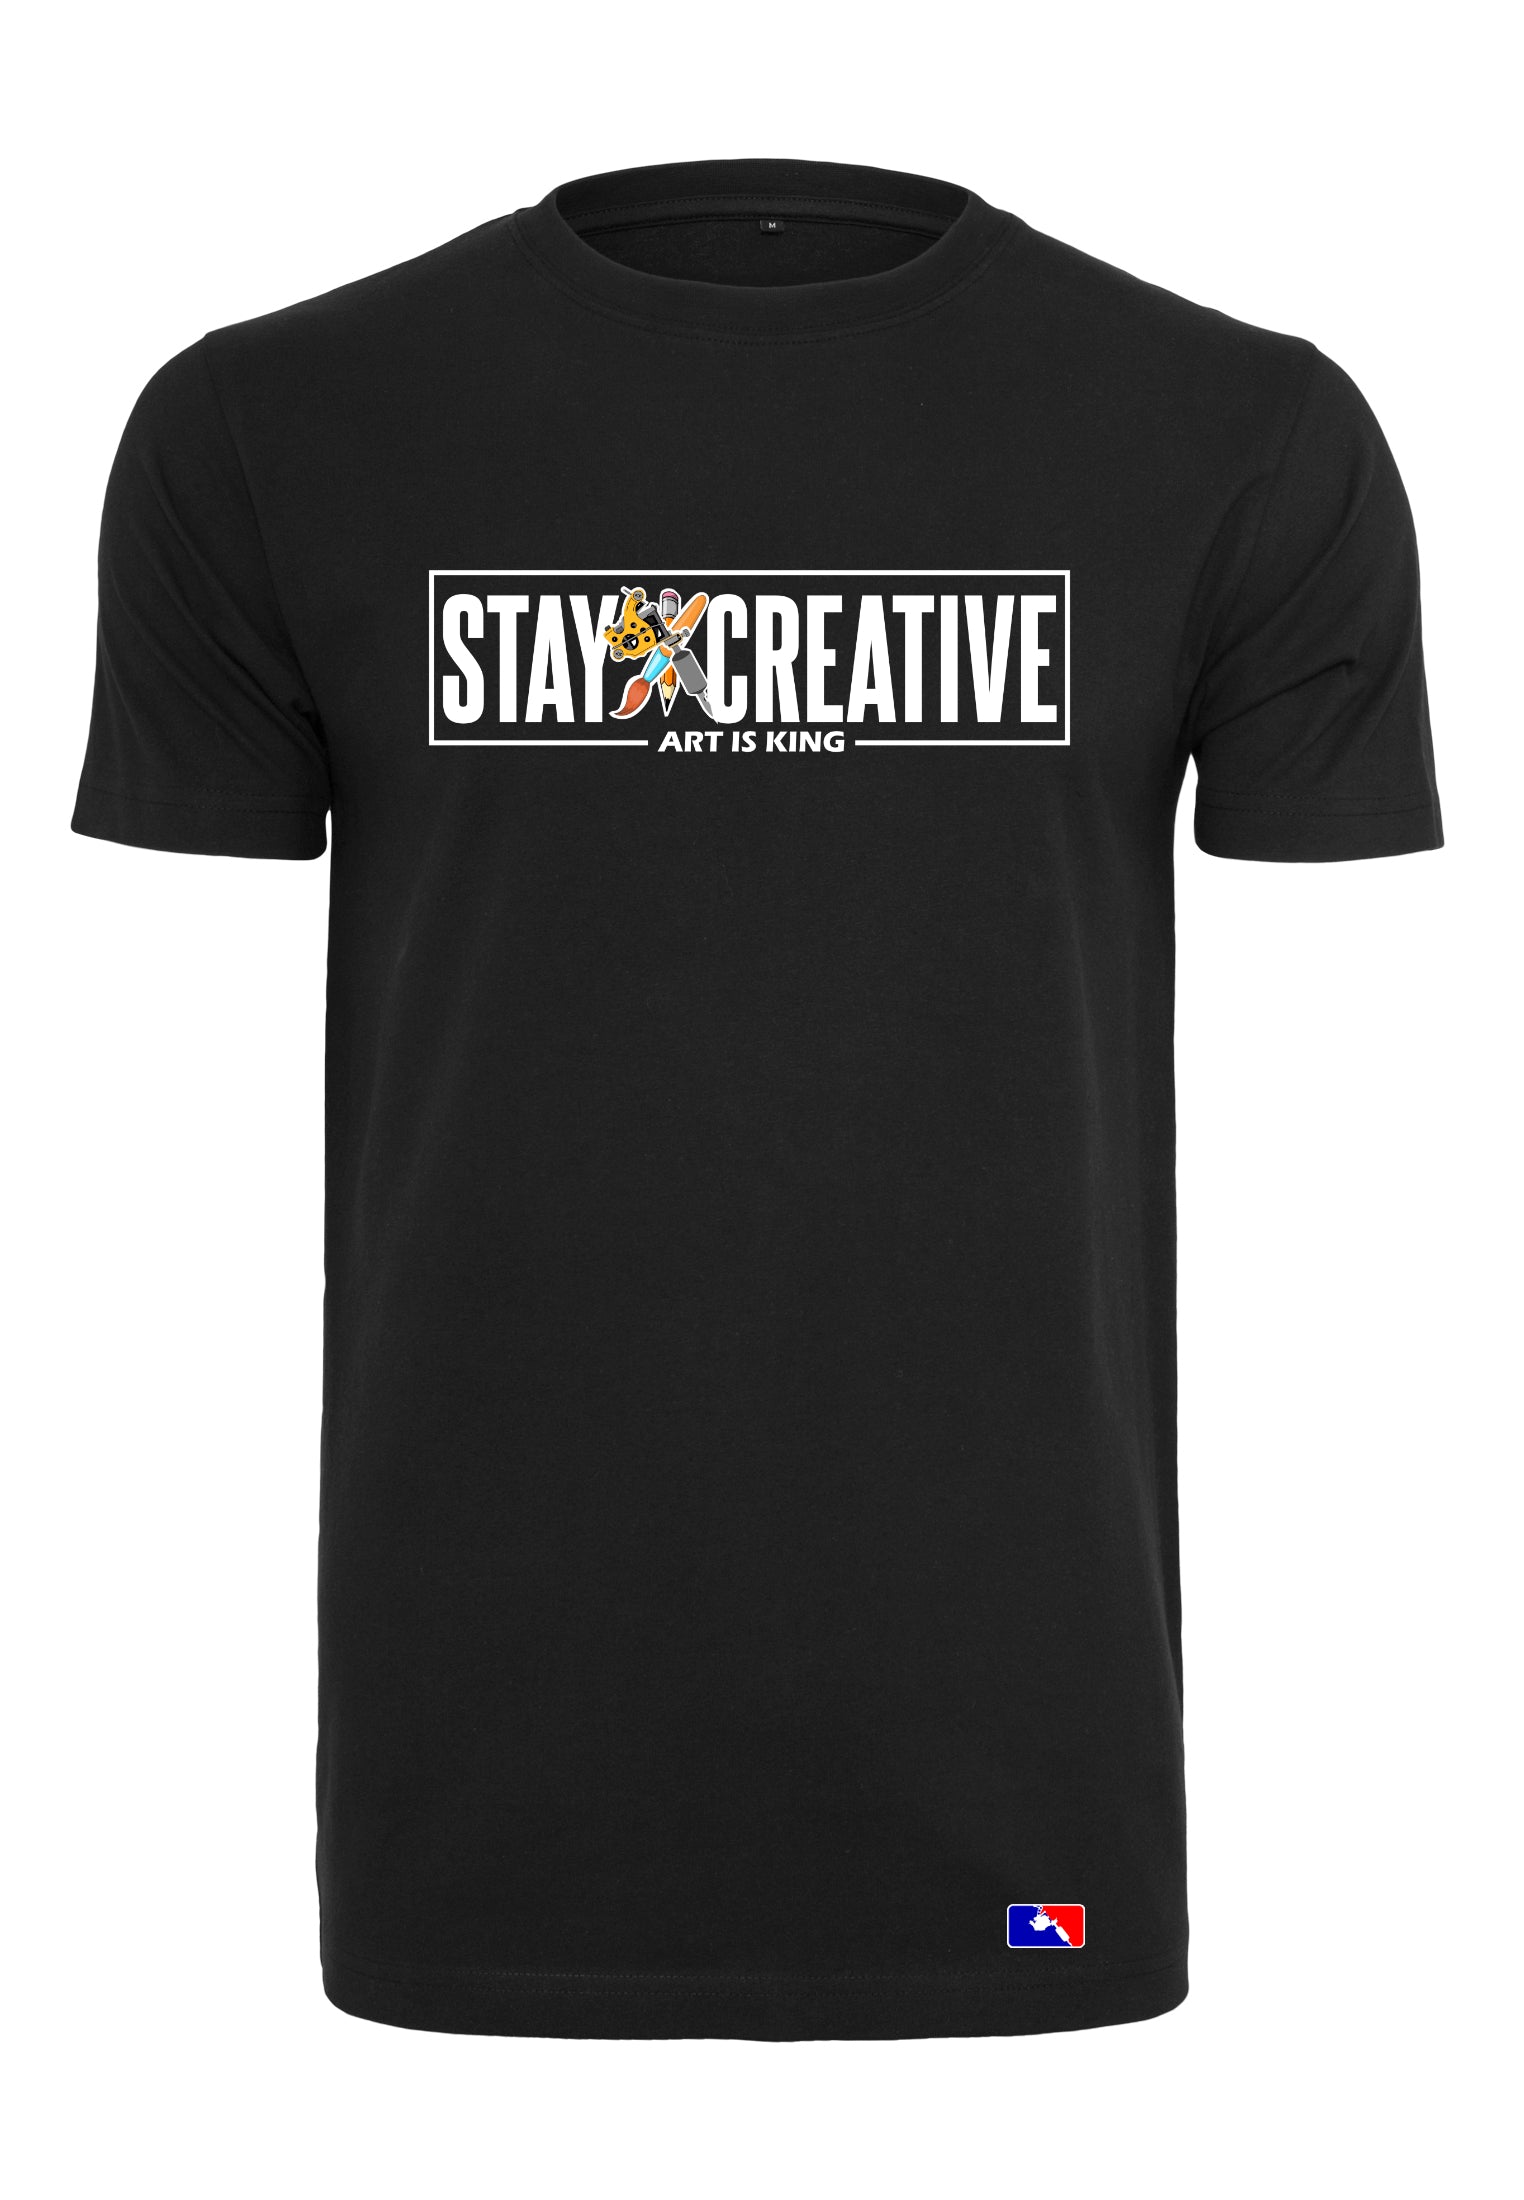 Stay creative Shirt